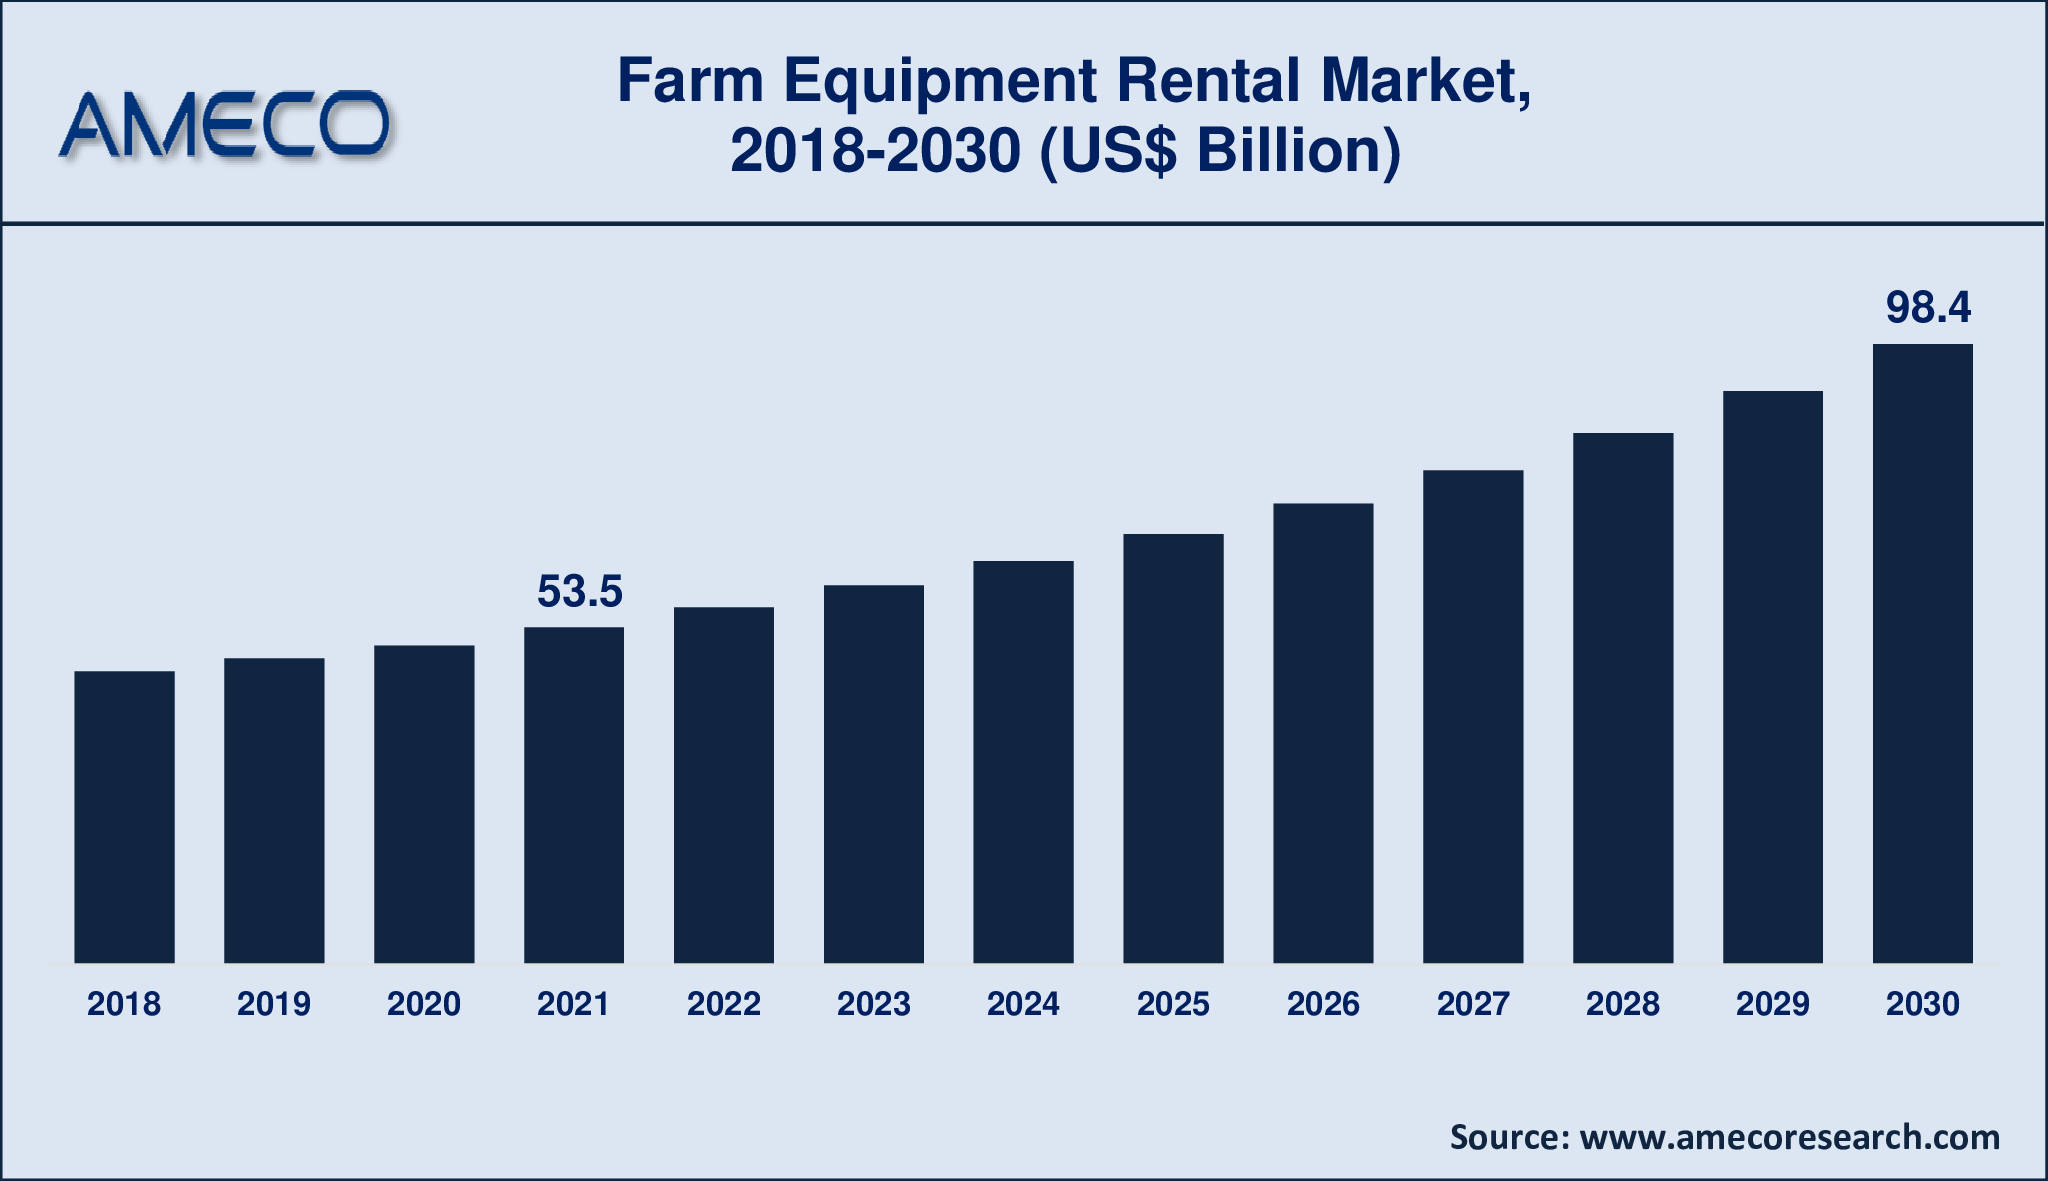 Farm Equipment Rental Market Dynamics